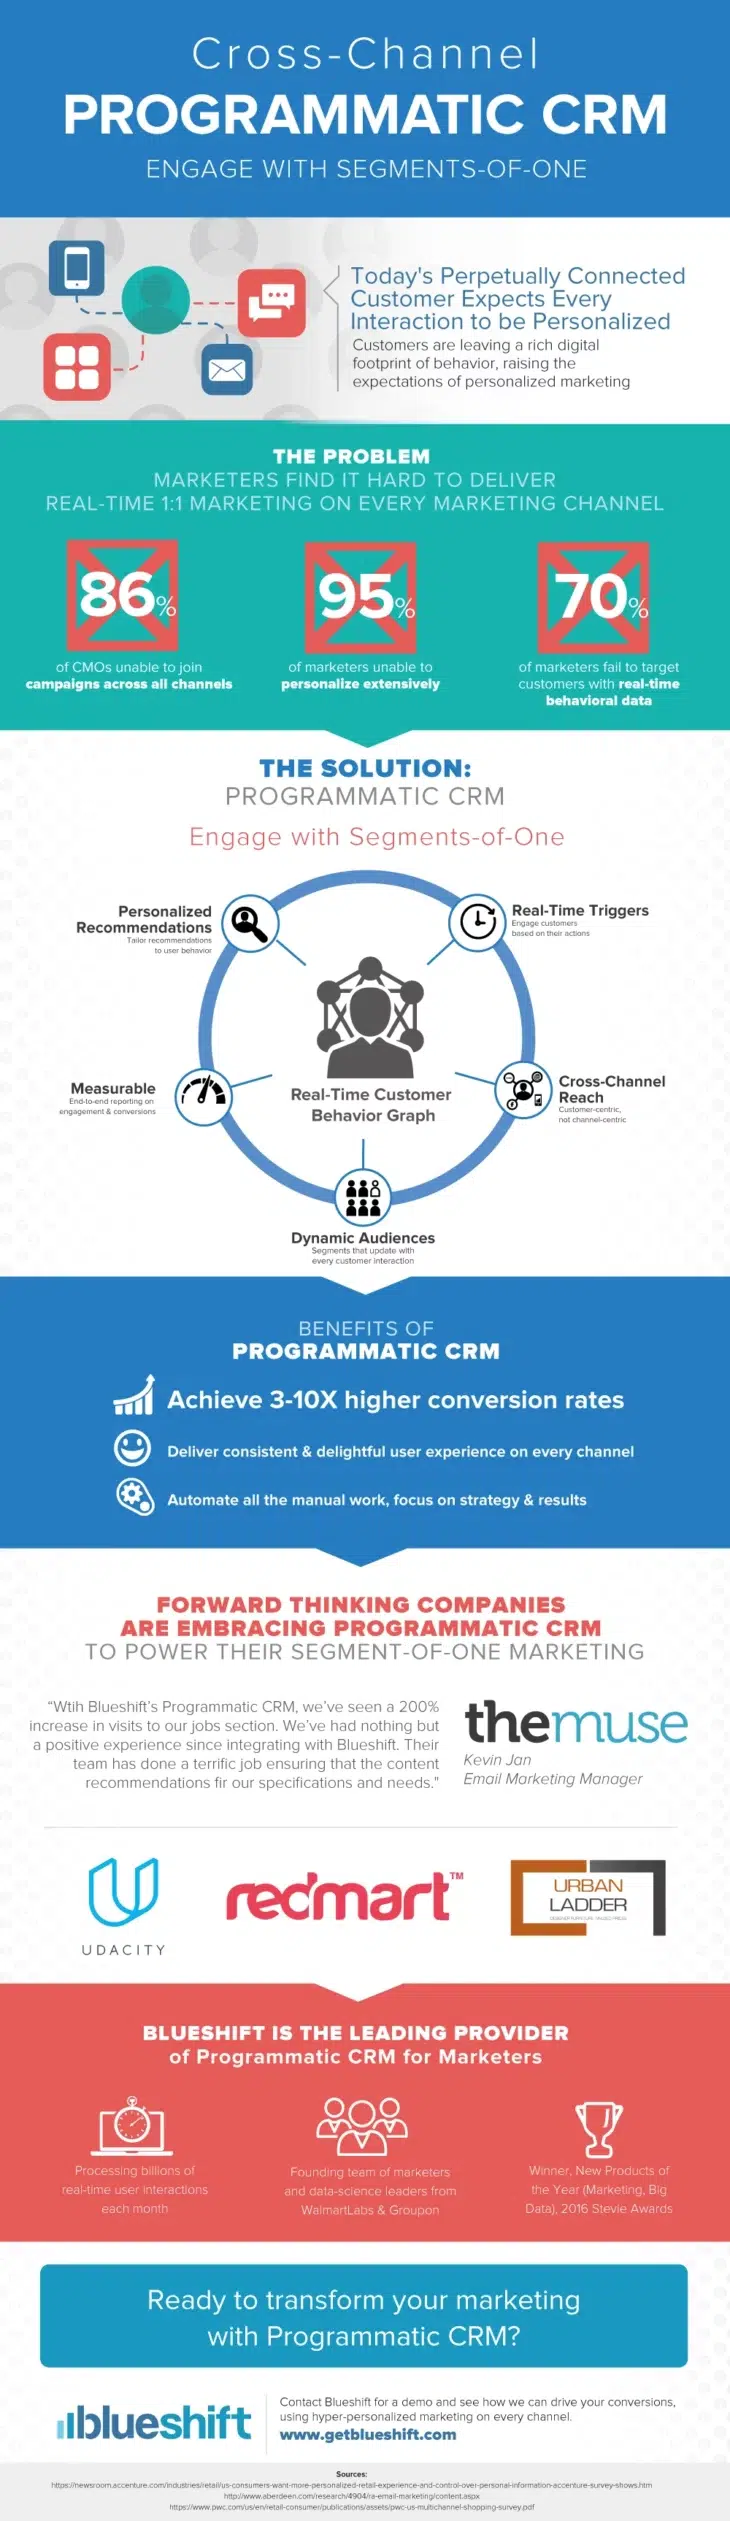 Programmatic CRM infographic